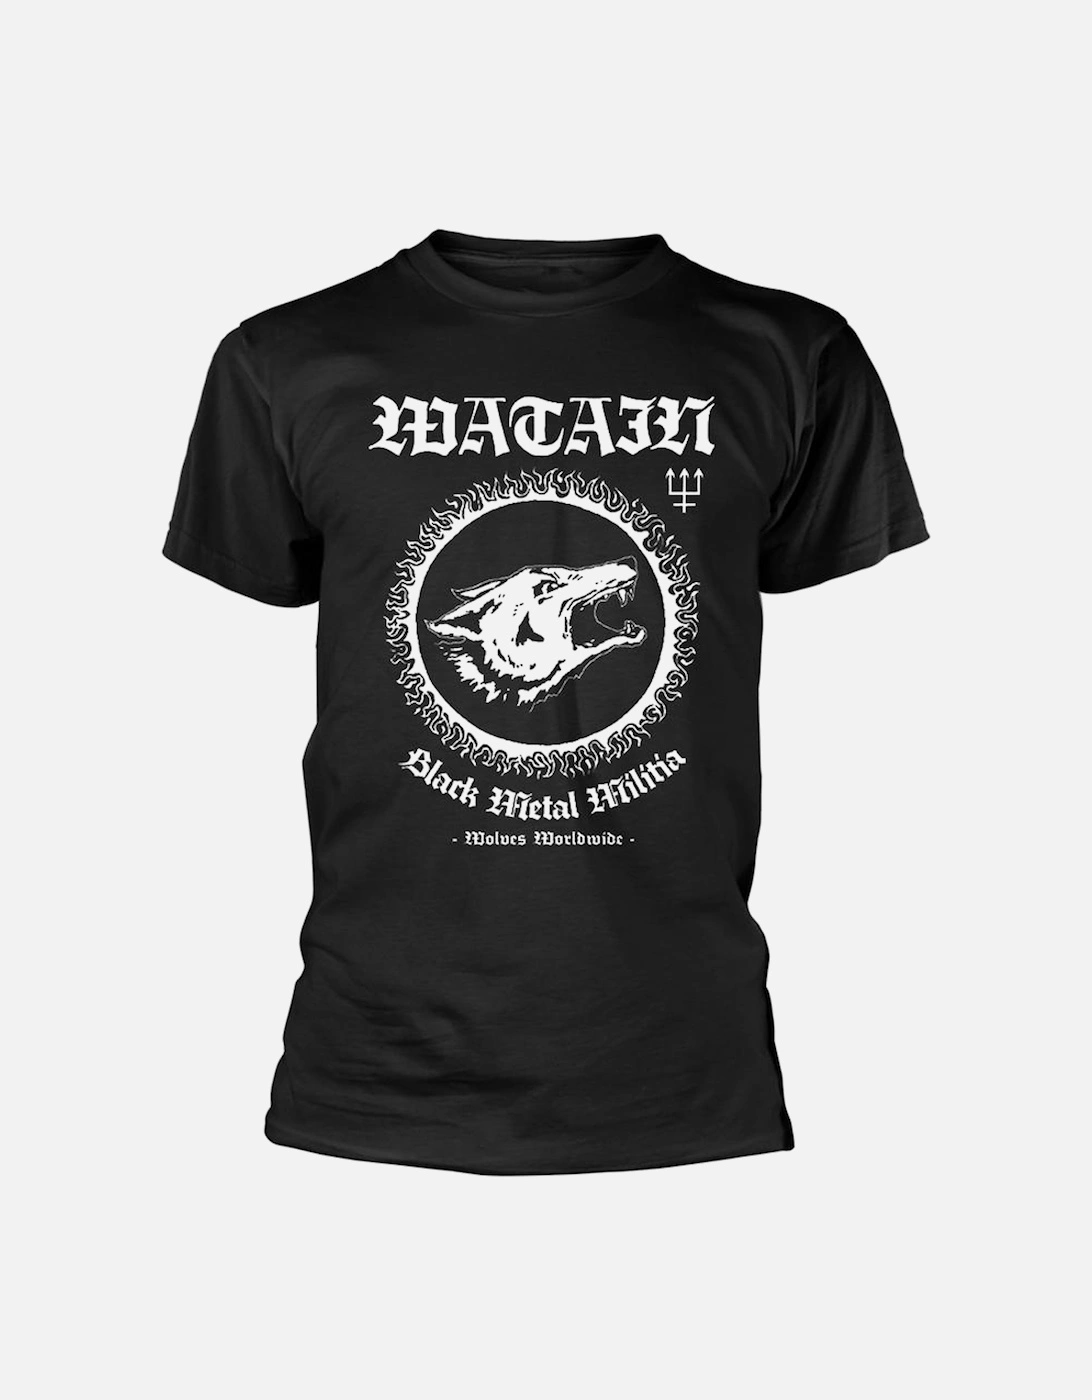 Unisex Adult Black Metal Militia T-Shirt, 3 of 2